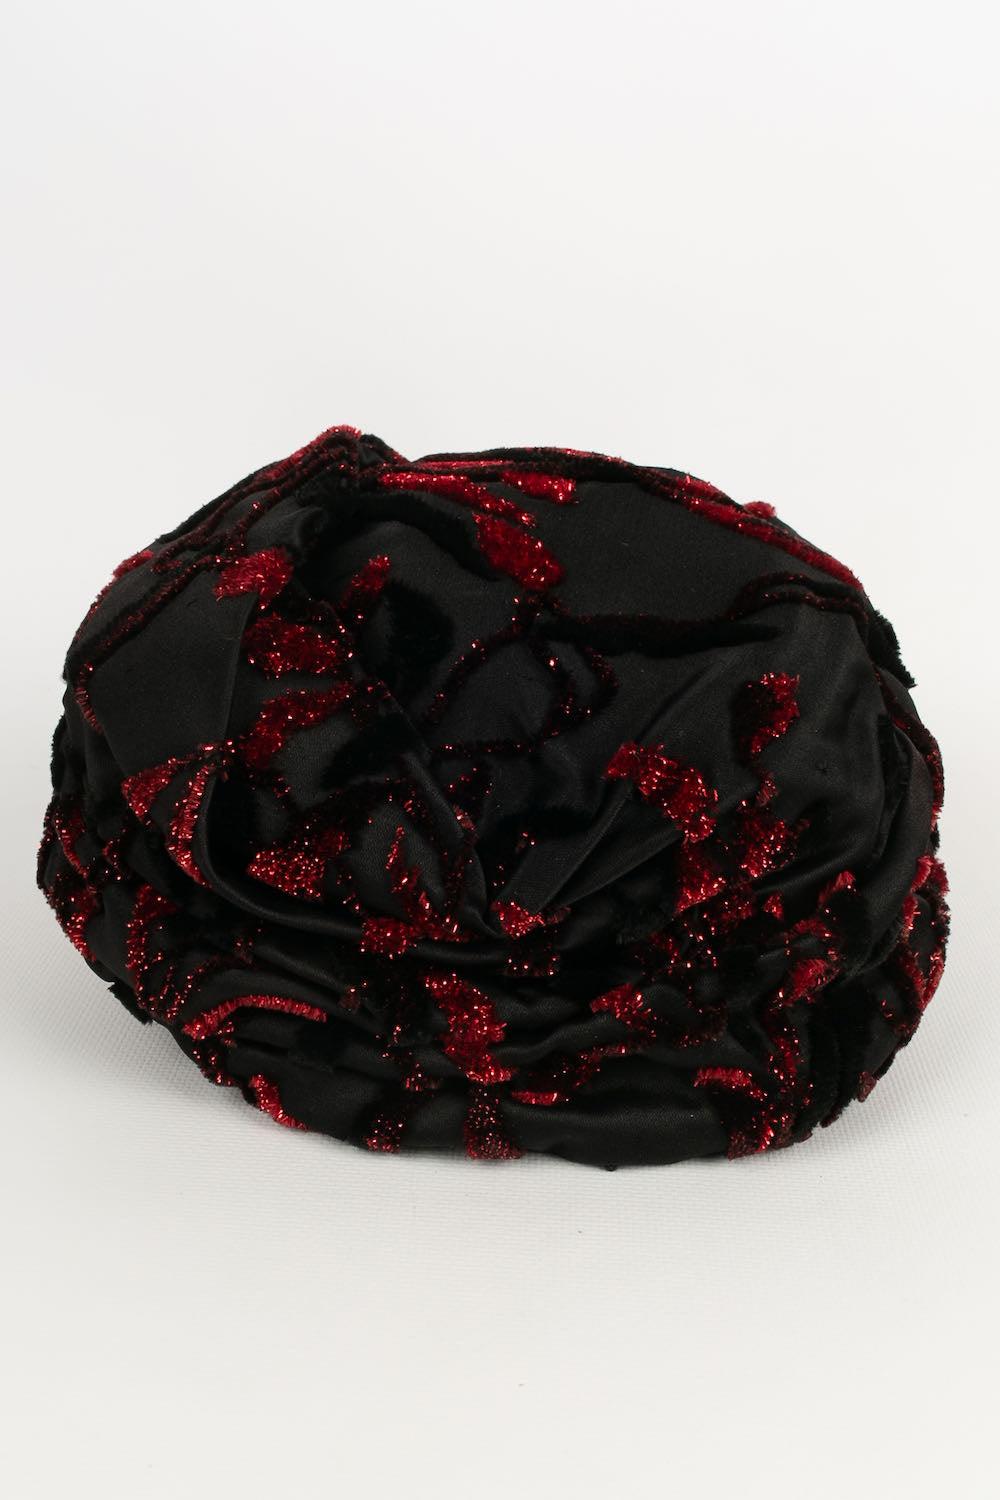 Women's Dior Black Silk and Red Velvet Hat